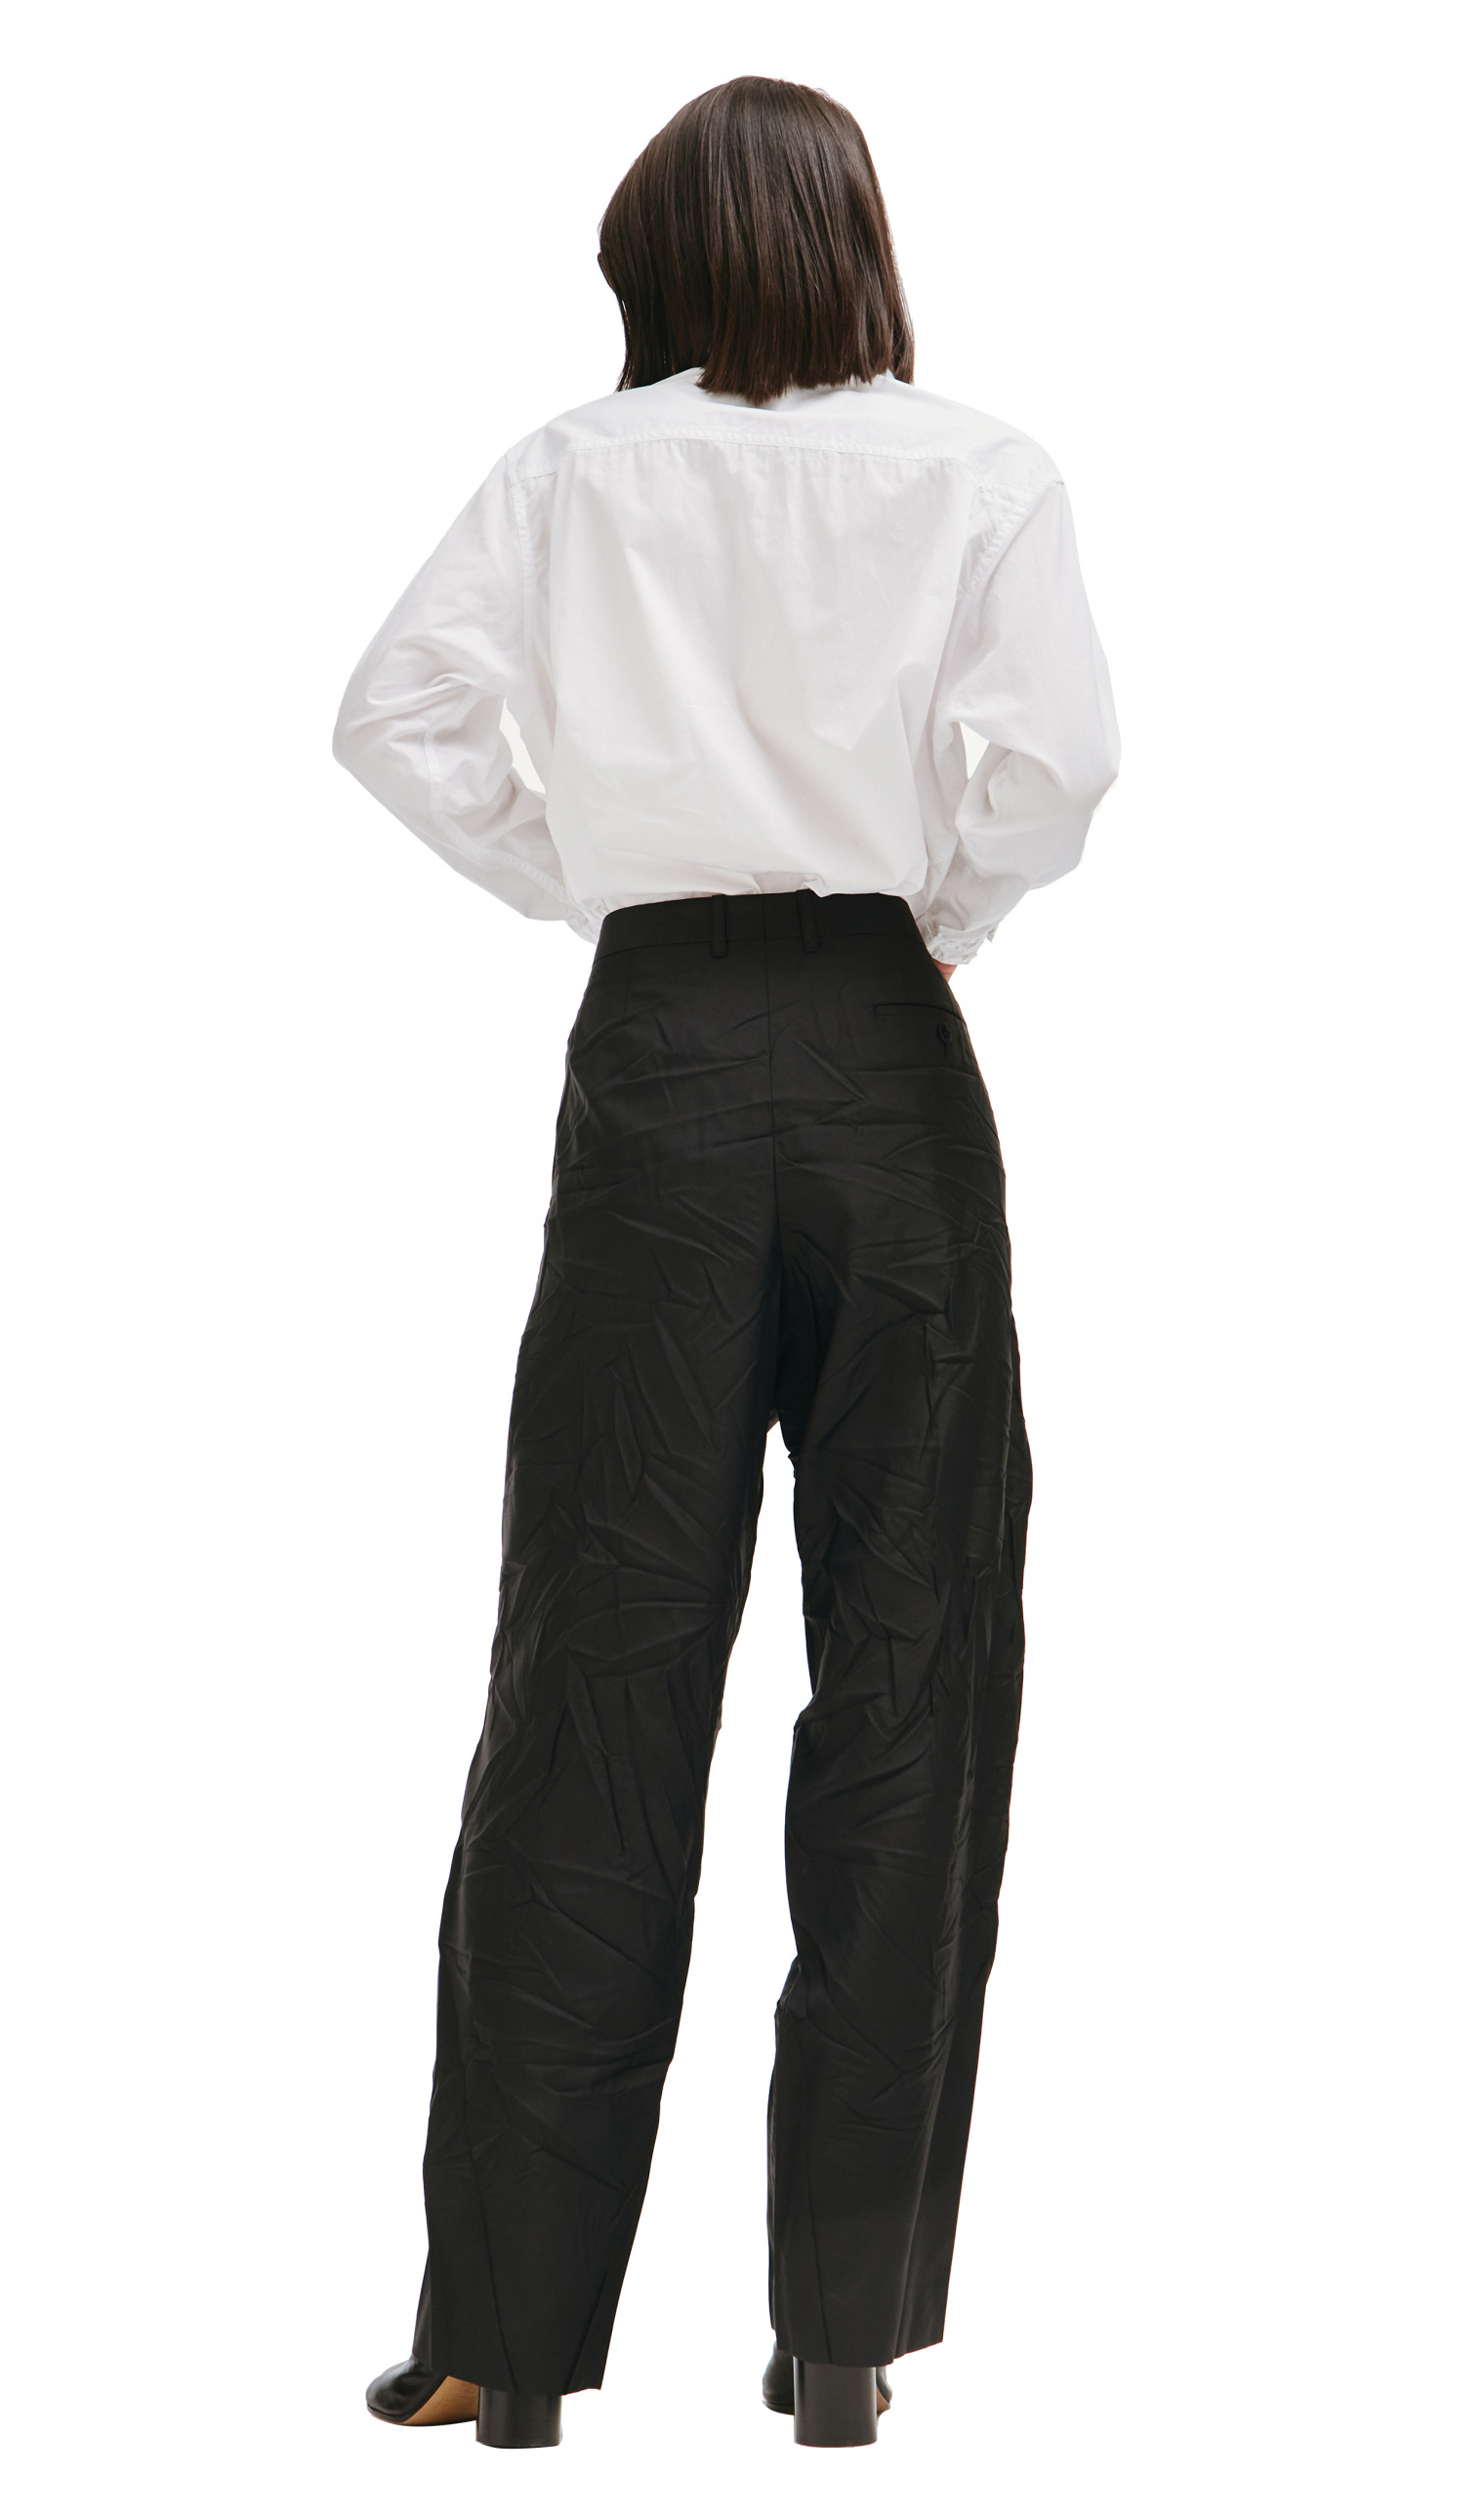 Balenciaga Wrinkled Pants in Black